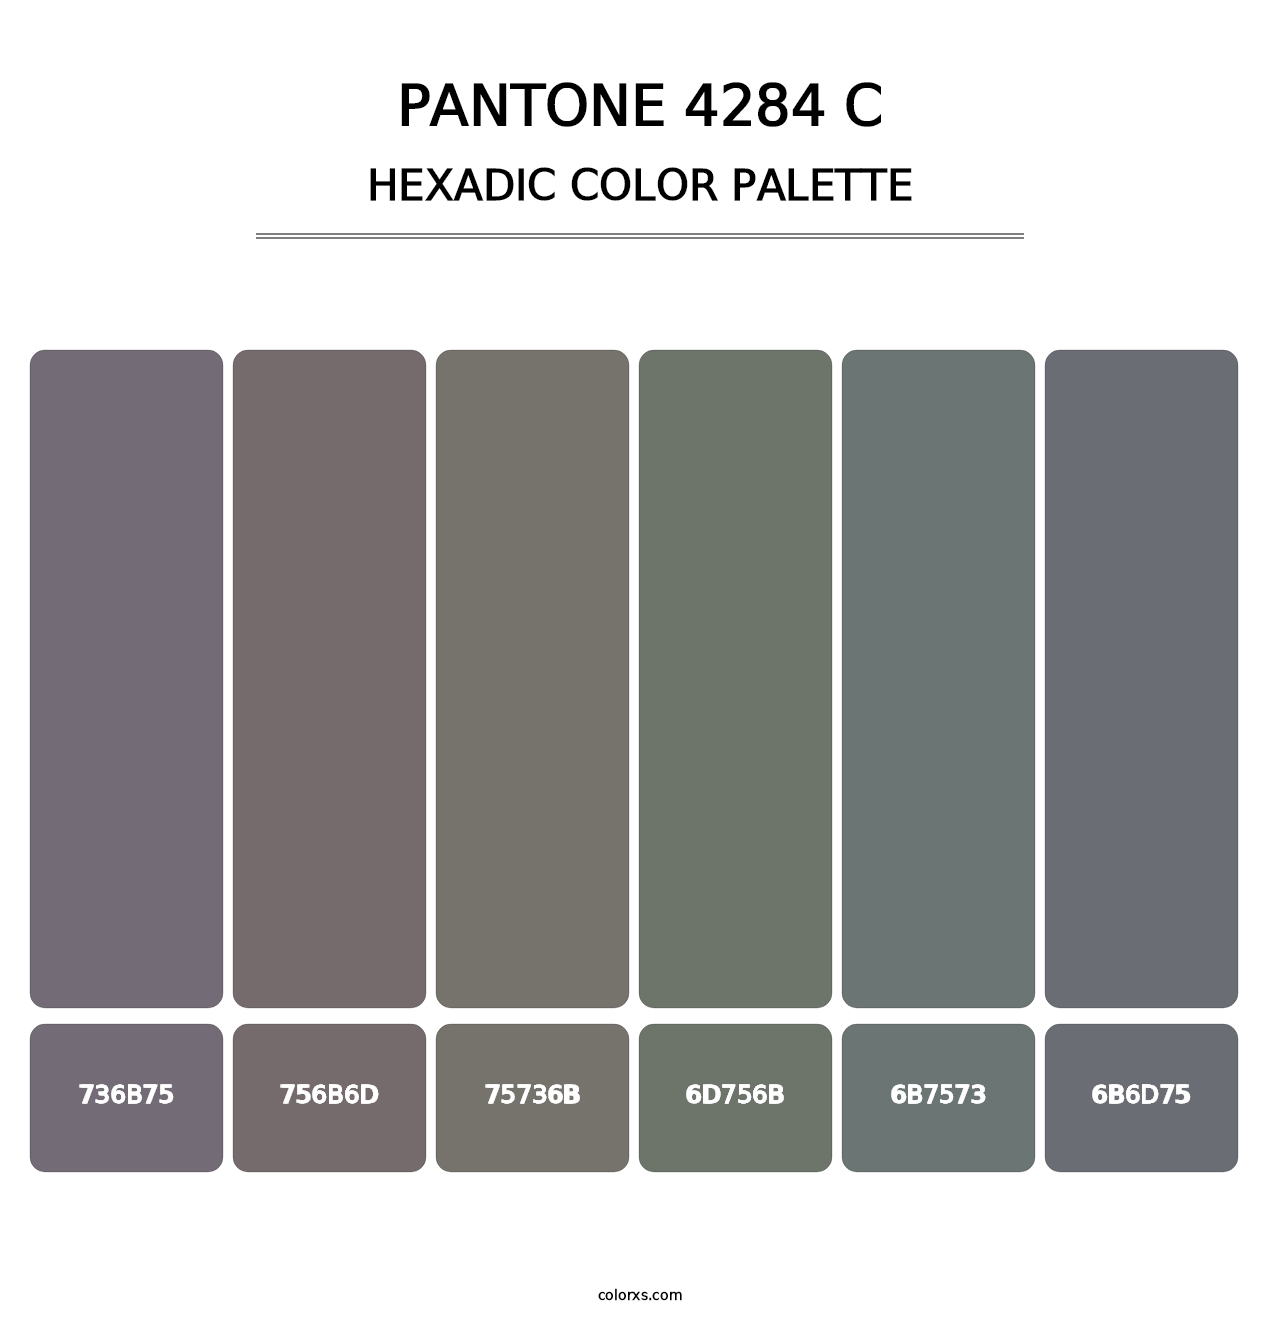 PANTONE 4284 C - Hexadic Color Palette